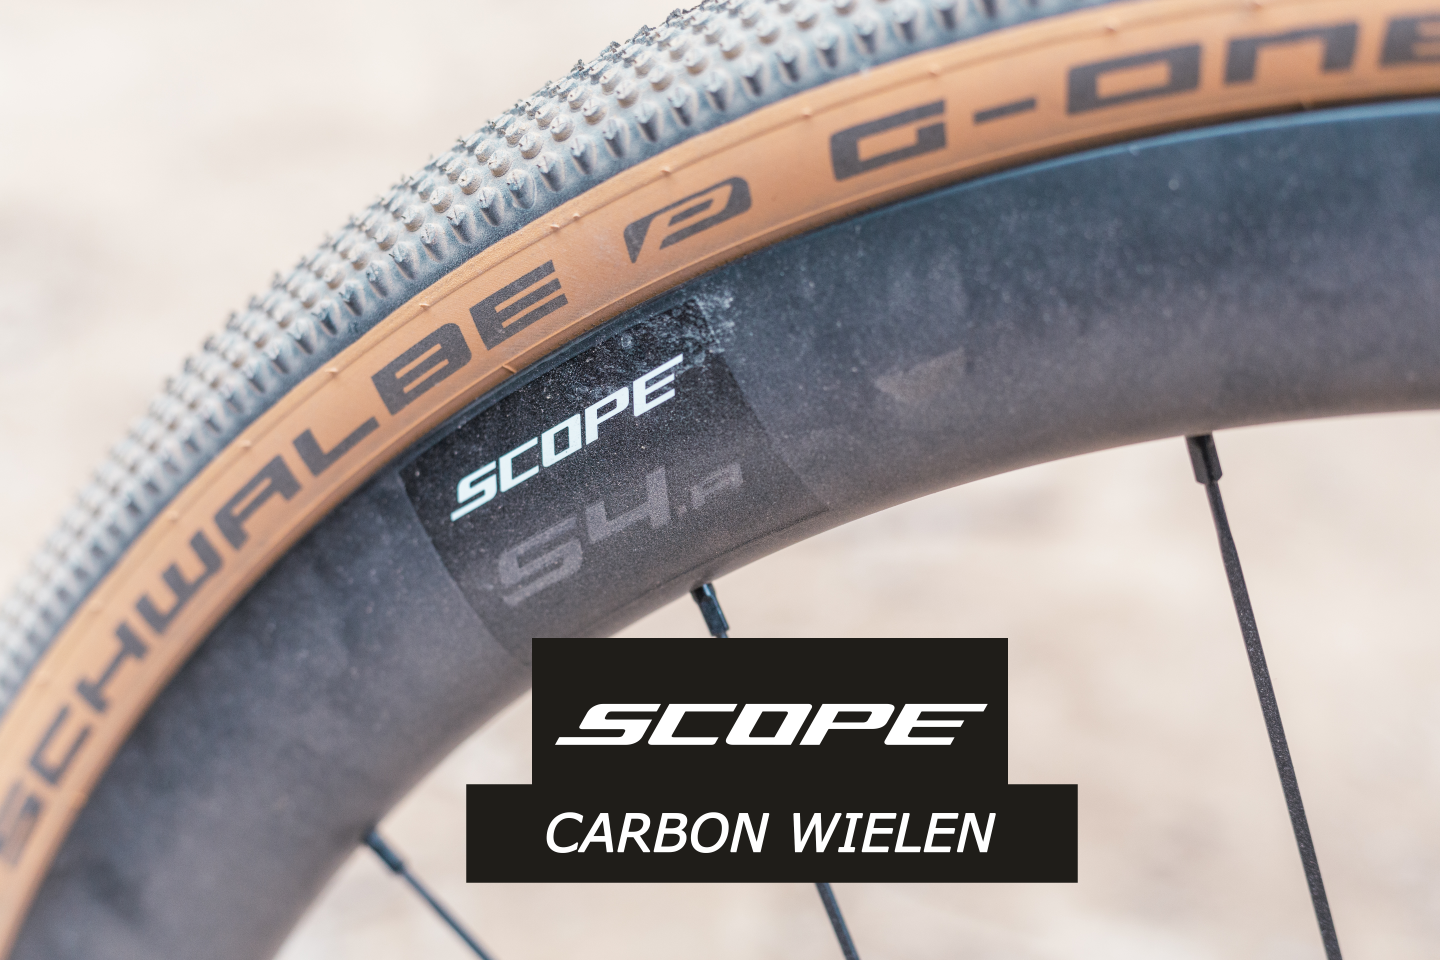 Scope carbon wielen | Kwaliteit, innovatie en passie 